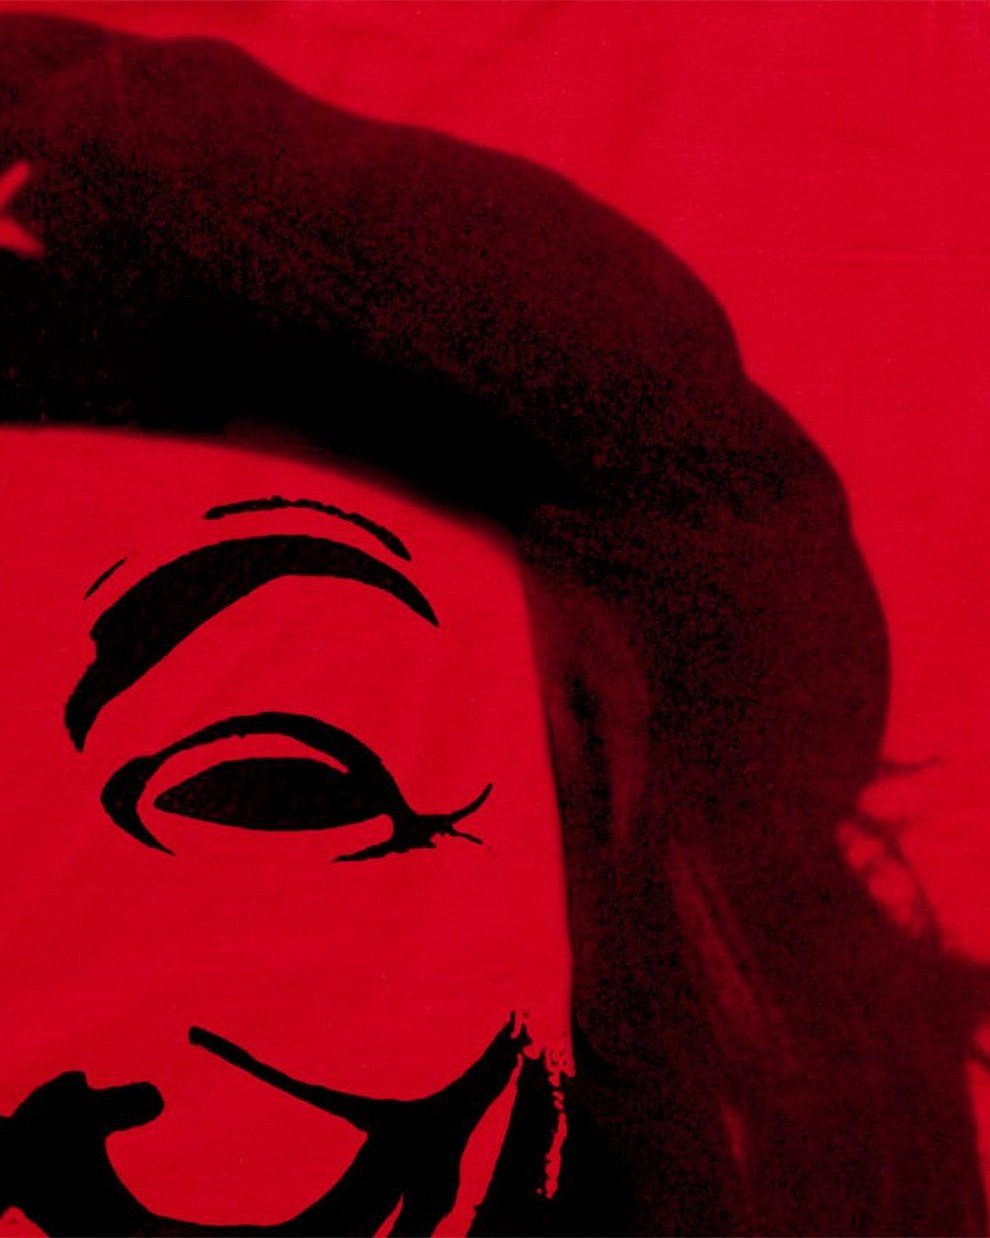 hacker kuba T-Shirt guy Guevara maske Herren Anonymous rot Che guy fawkes Print-Shirt g8 style3 fawkes occupy